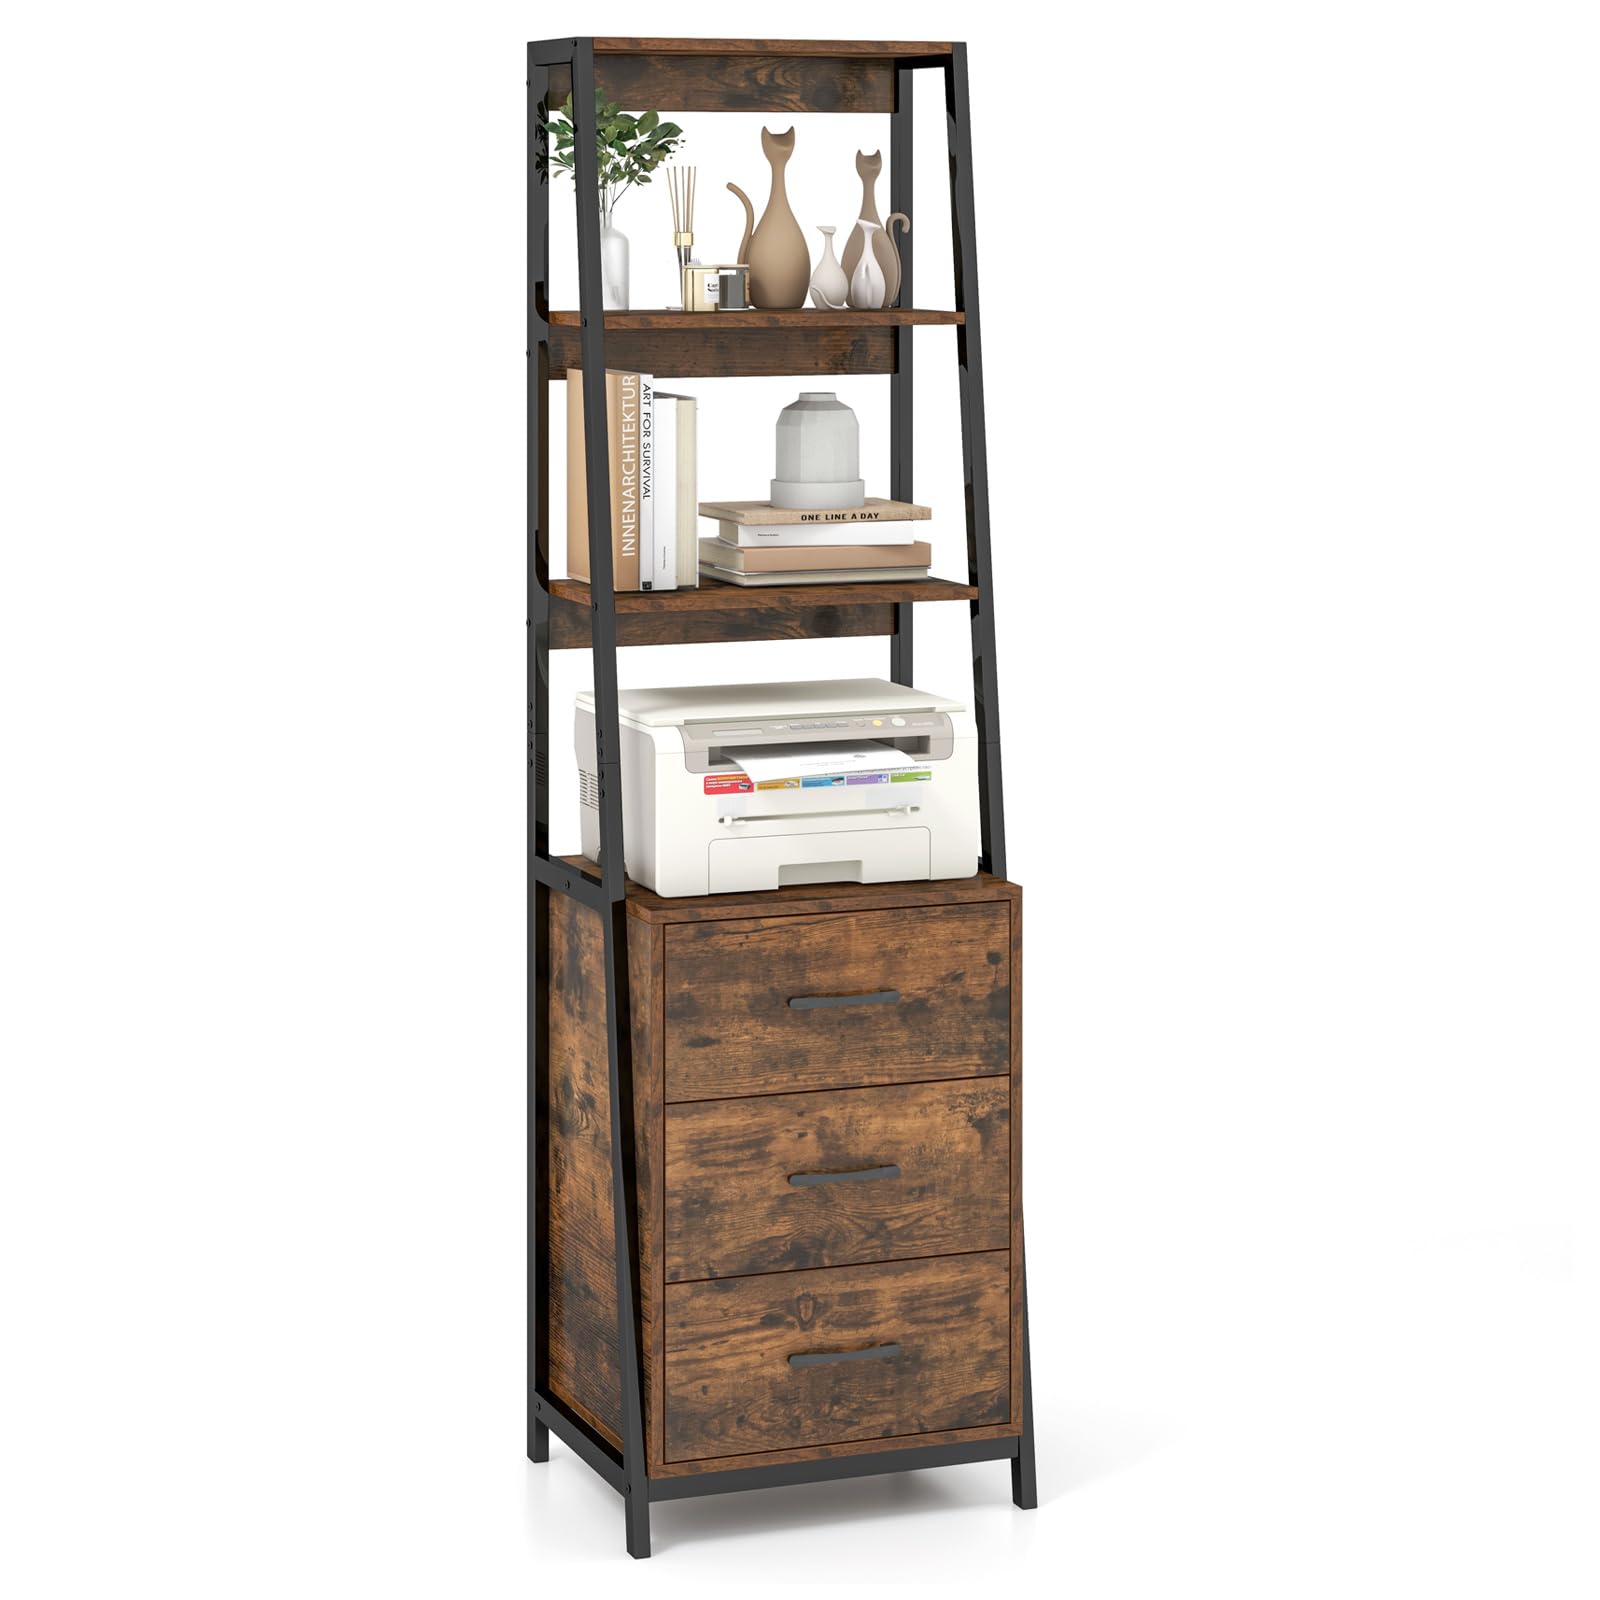 Giantex Ladder Bookshelf with Drawers